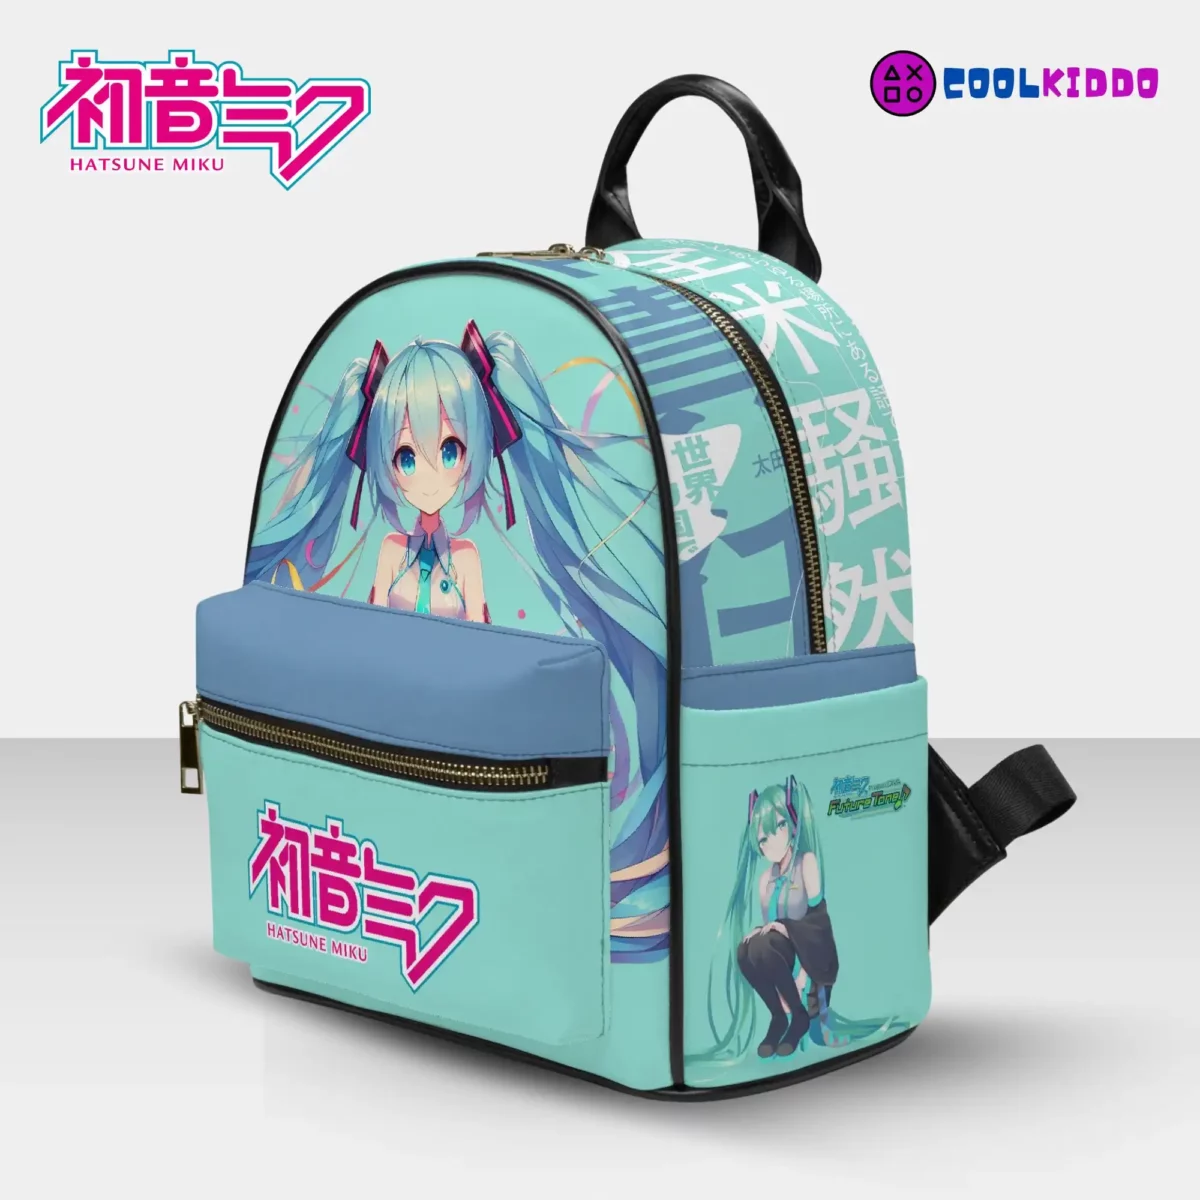 Hatsune Miku Anime Style Mini Leather Backpack For Girls/Youth | School Book Bag Cool Kiddo 12